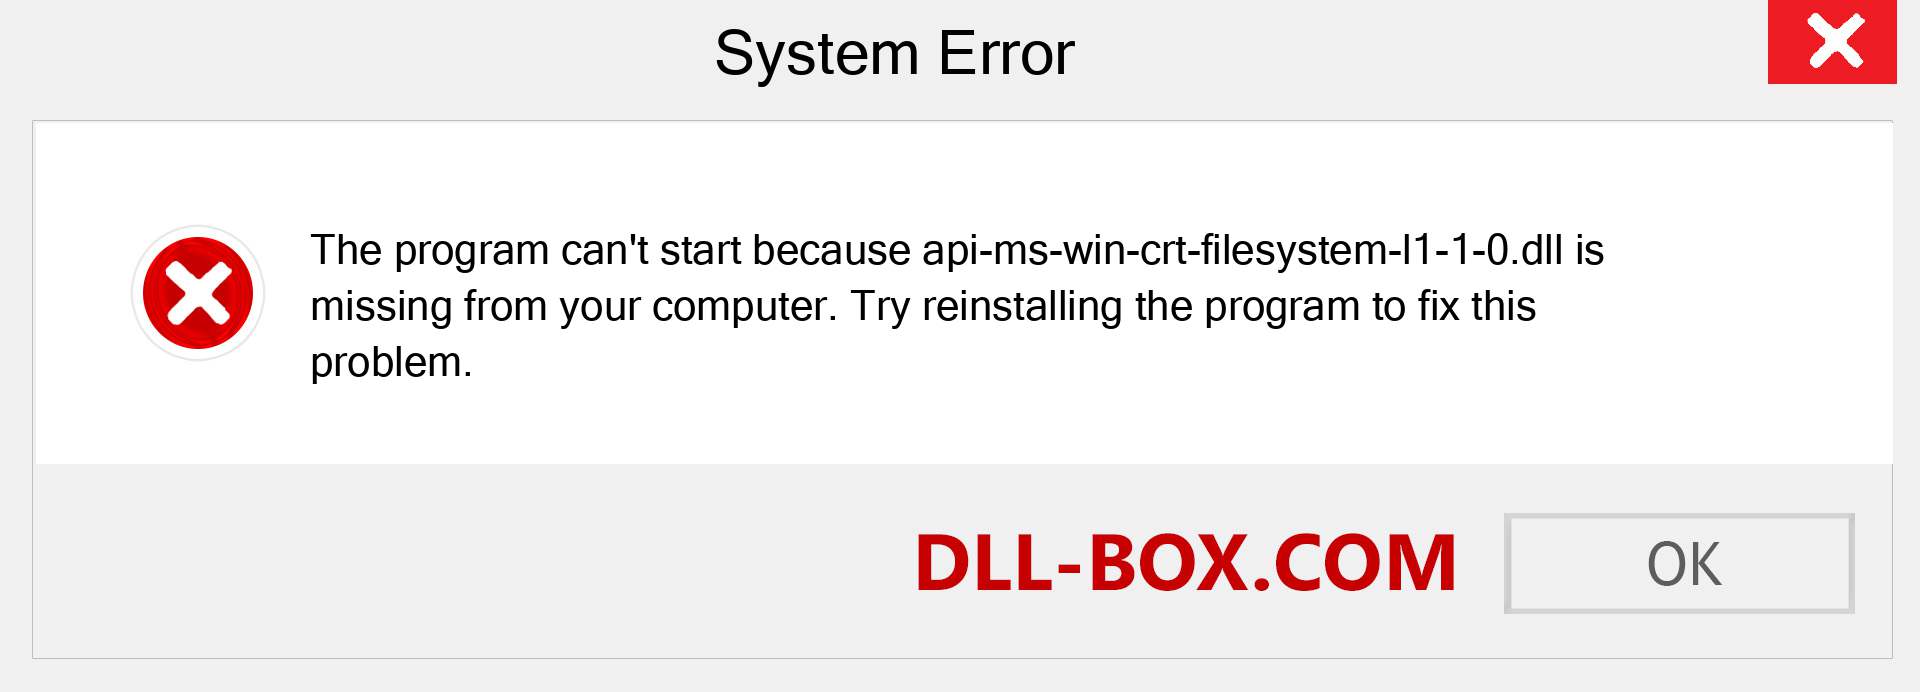  api-ms-win-crt-filesystem-l1-1-0.dll file is missing?. Download for Windows 7, 8, 10 - Fix  api-ms-win-crt-filesystem-l1-1-0 dll Missing Error on Windows, photos, images